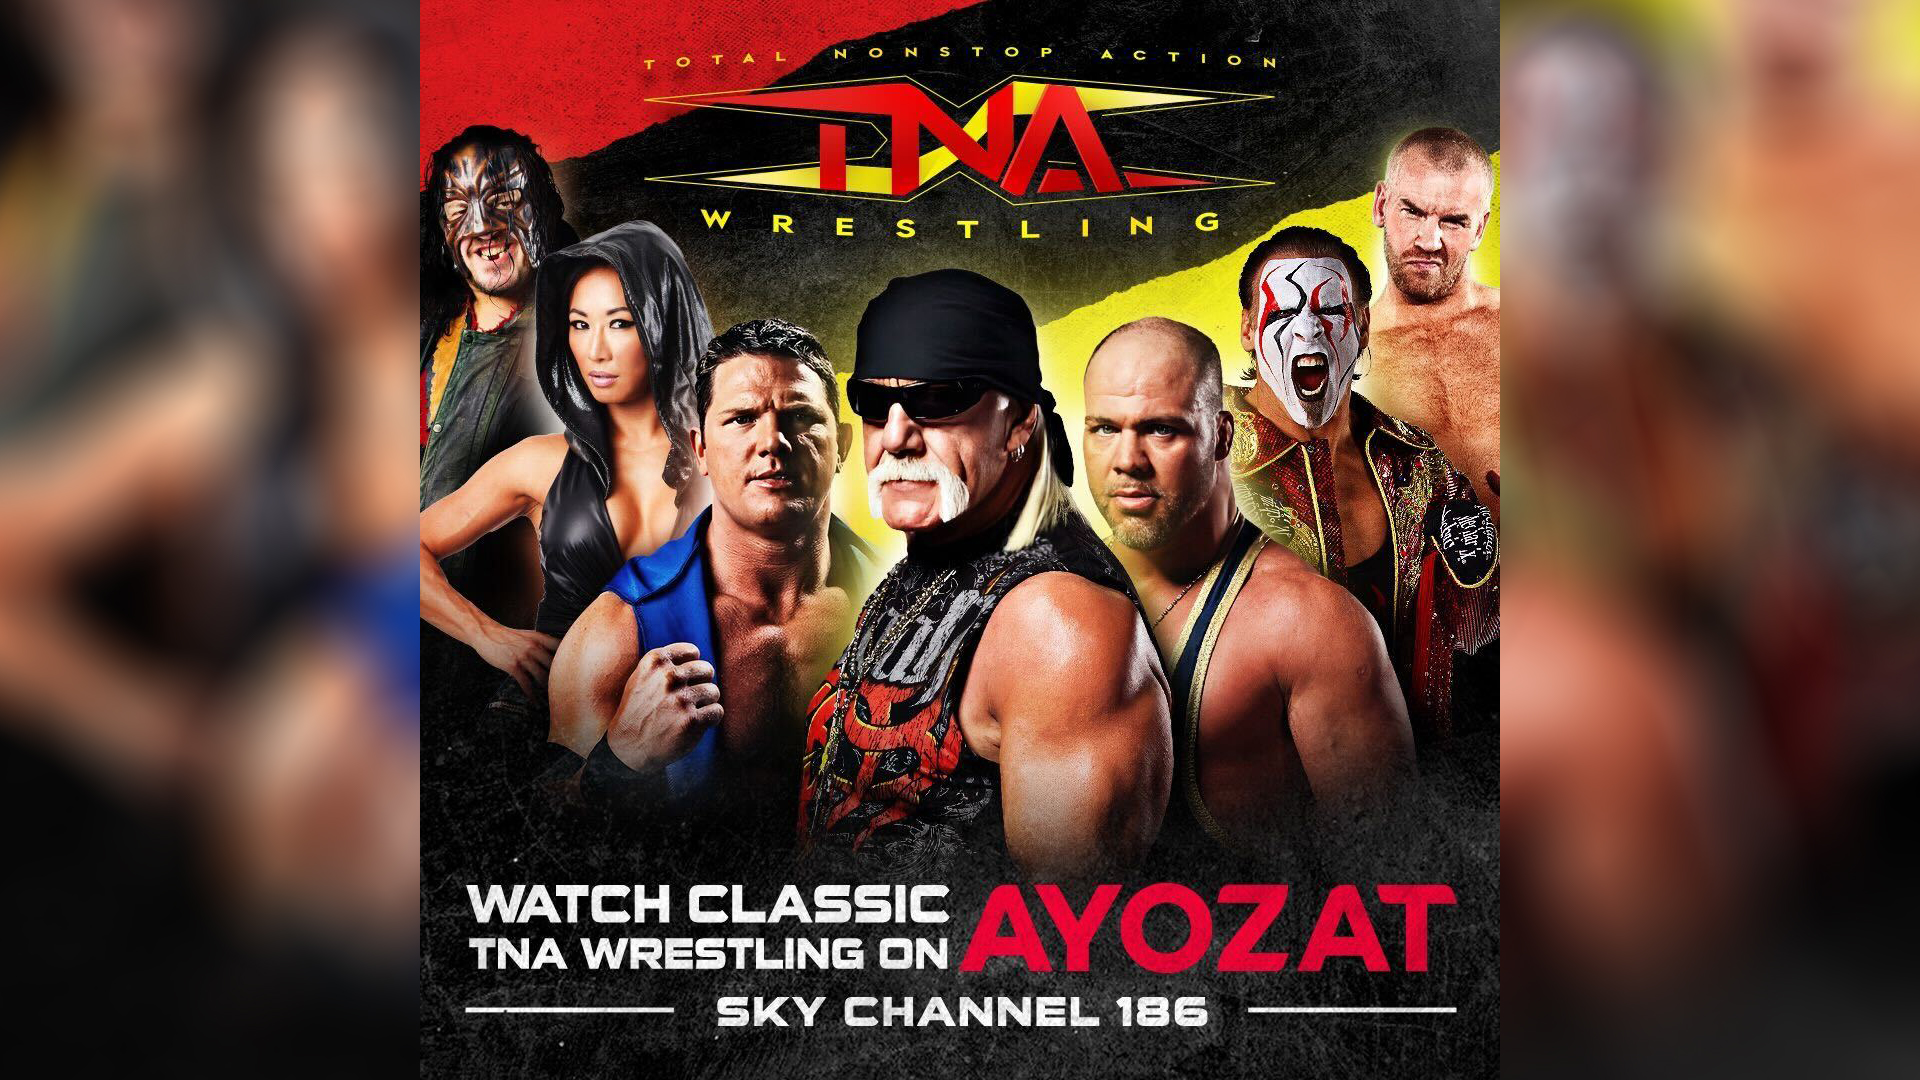 Classic TNA Wrestling Programing to Air on Ayozat TV Across the UK – TNA Wrestling